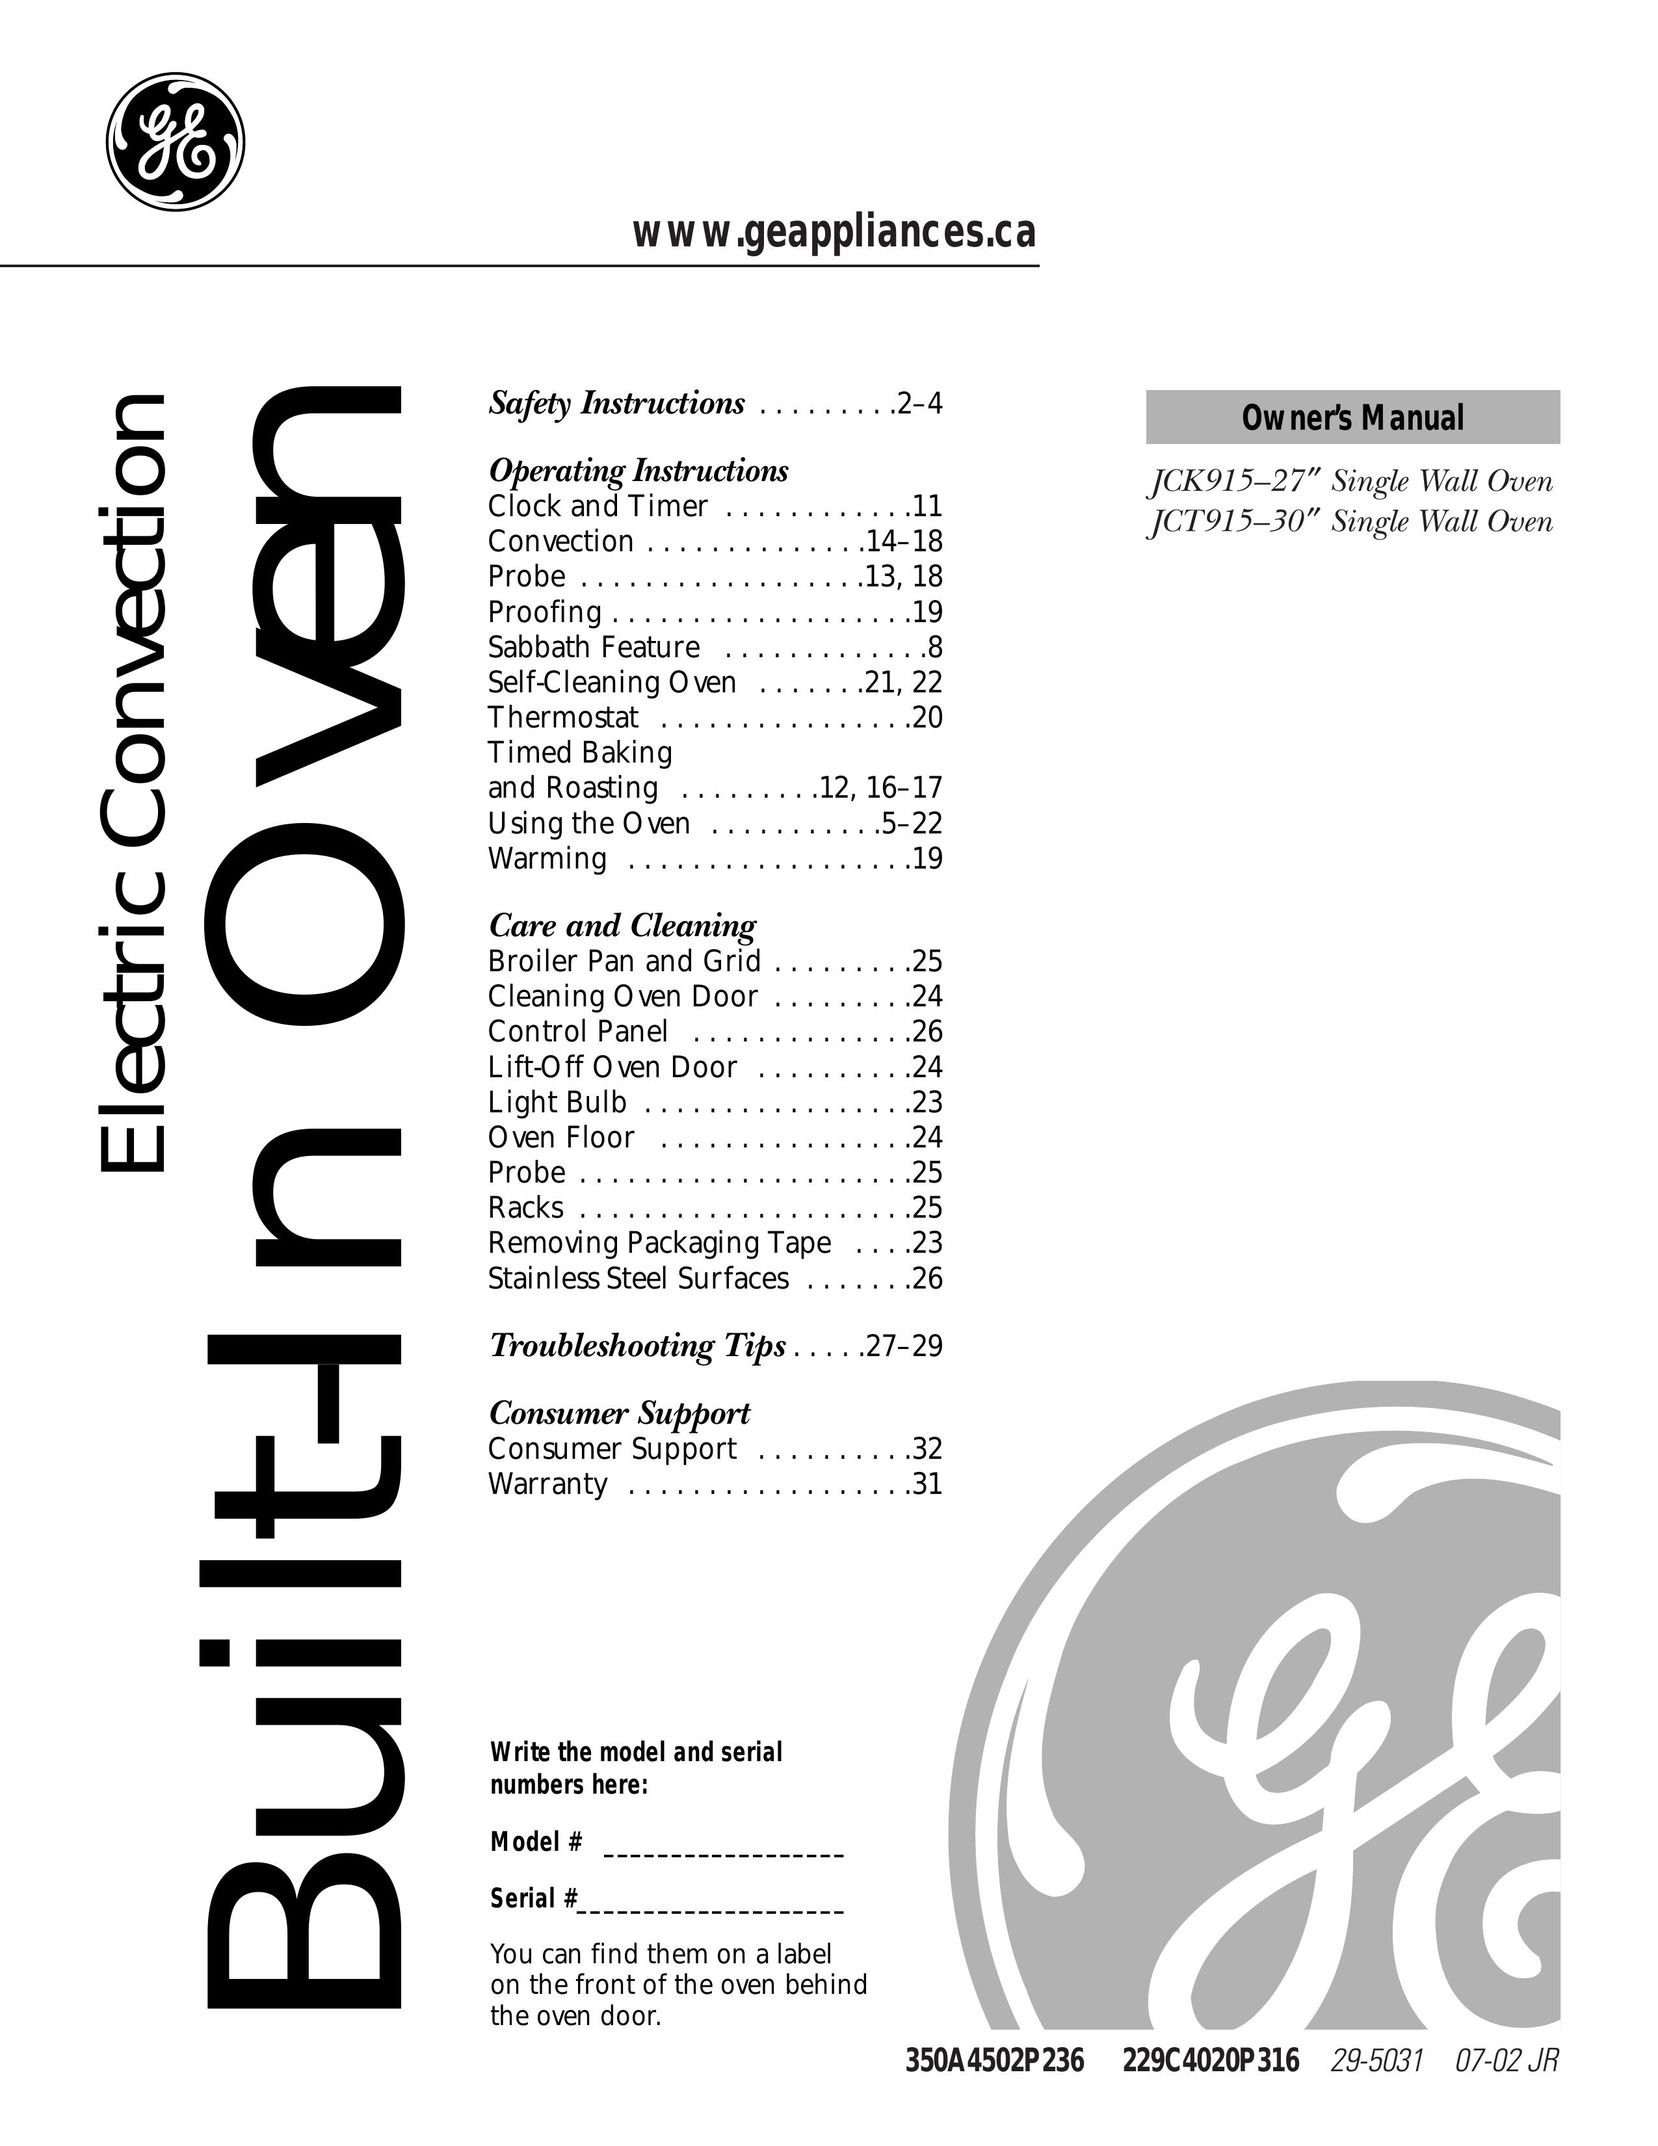 GE JCK 915 Oven User Manual